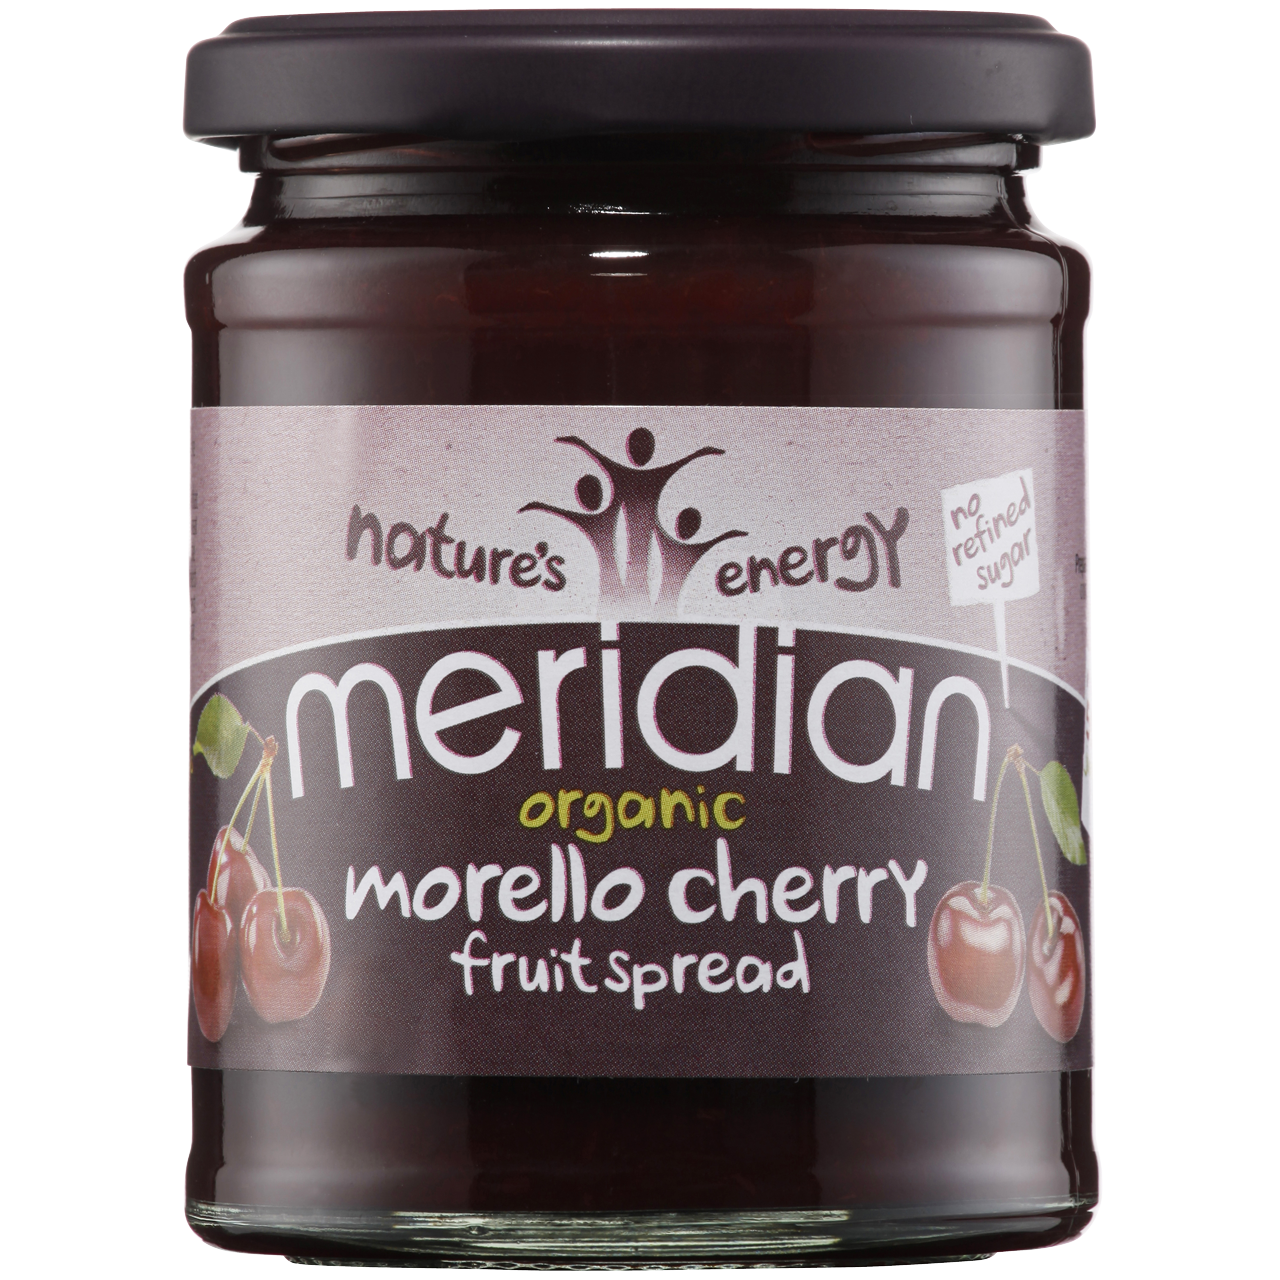 Meridian Organic Morello Cherry Fruit Spread 284g - Just Natural